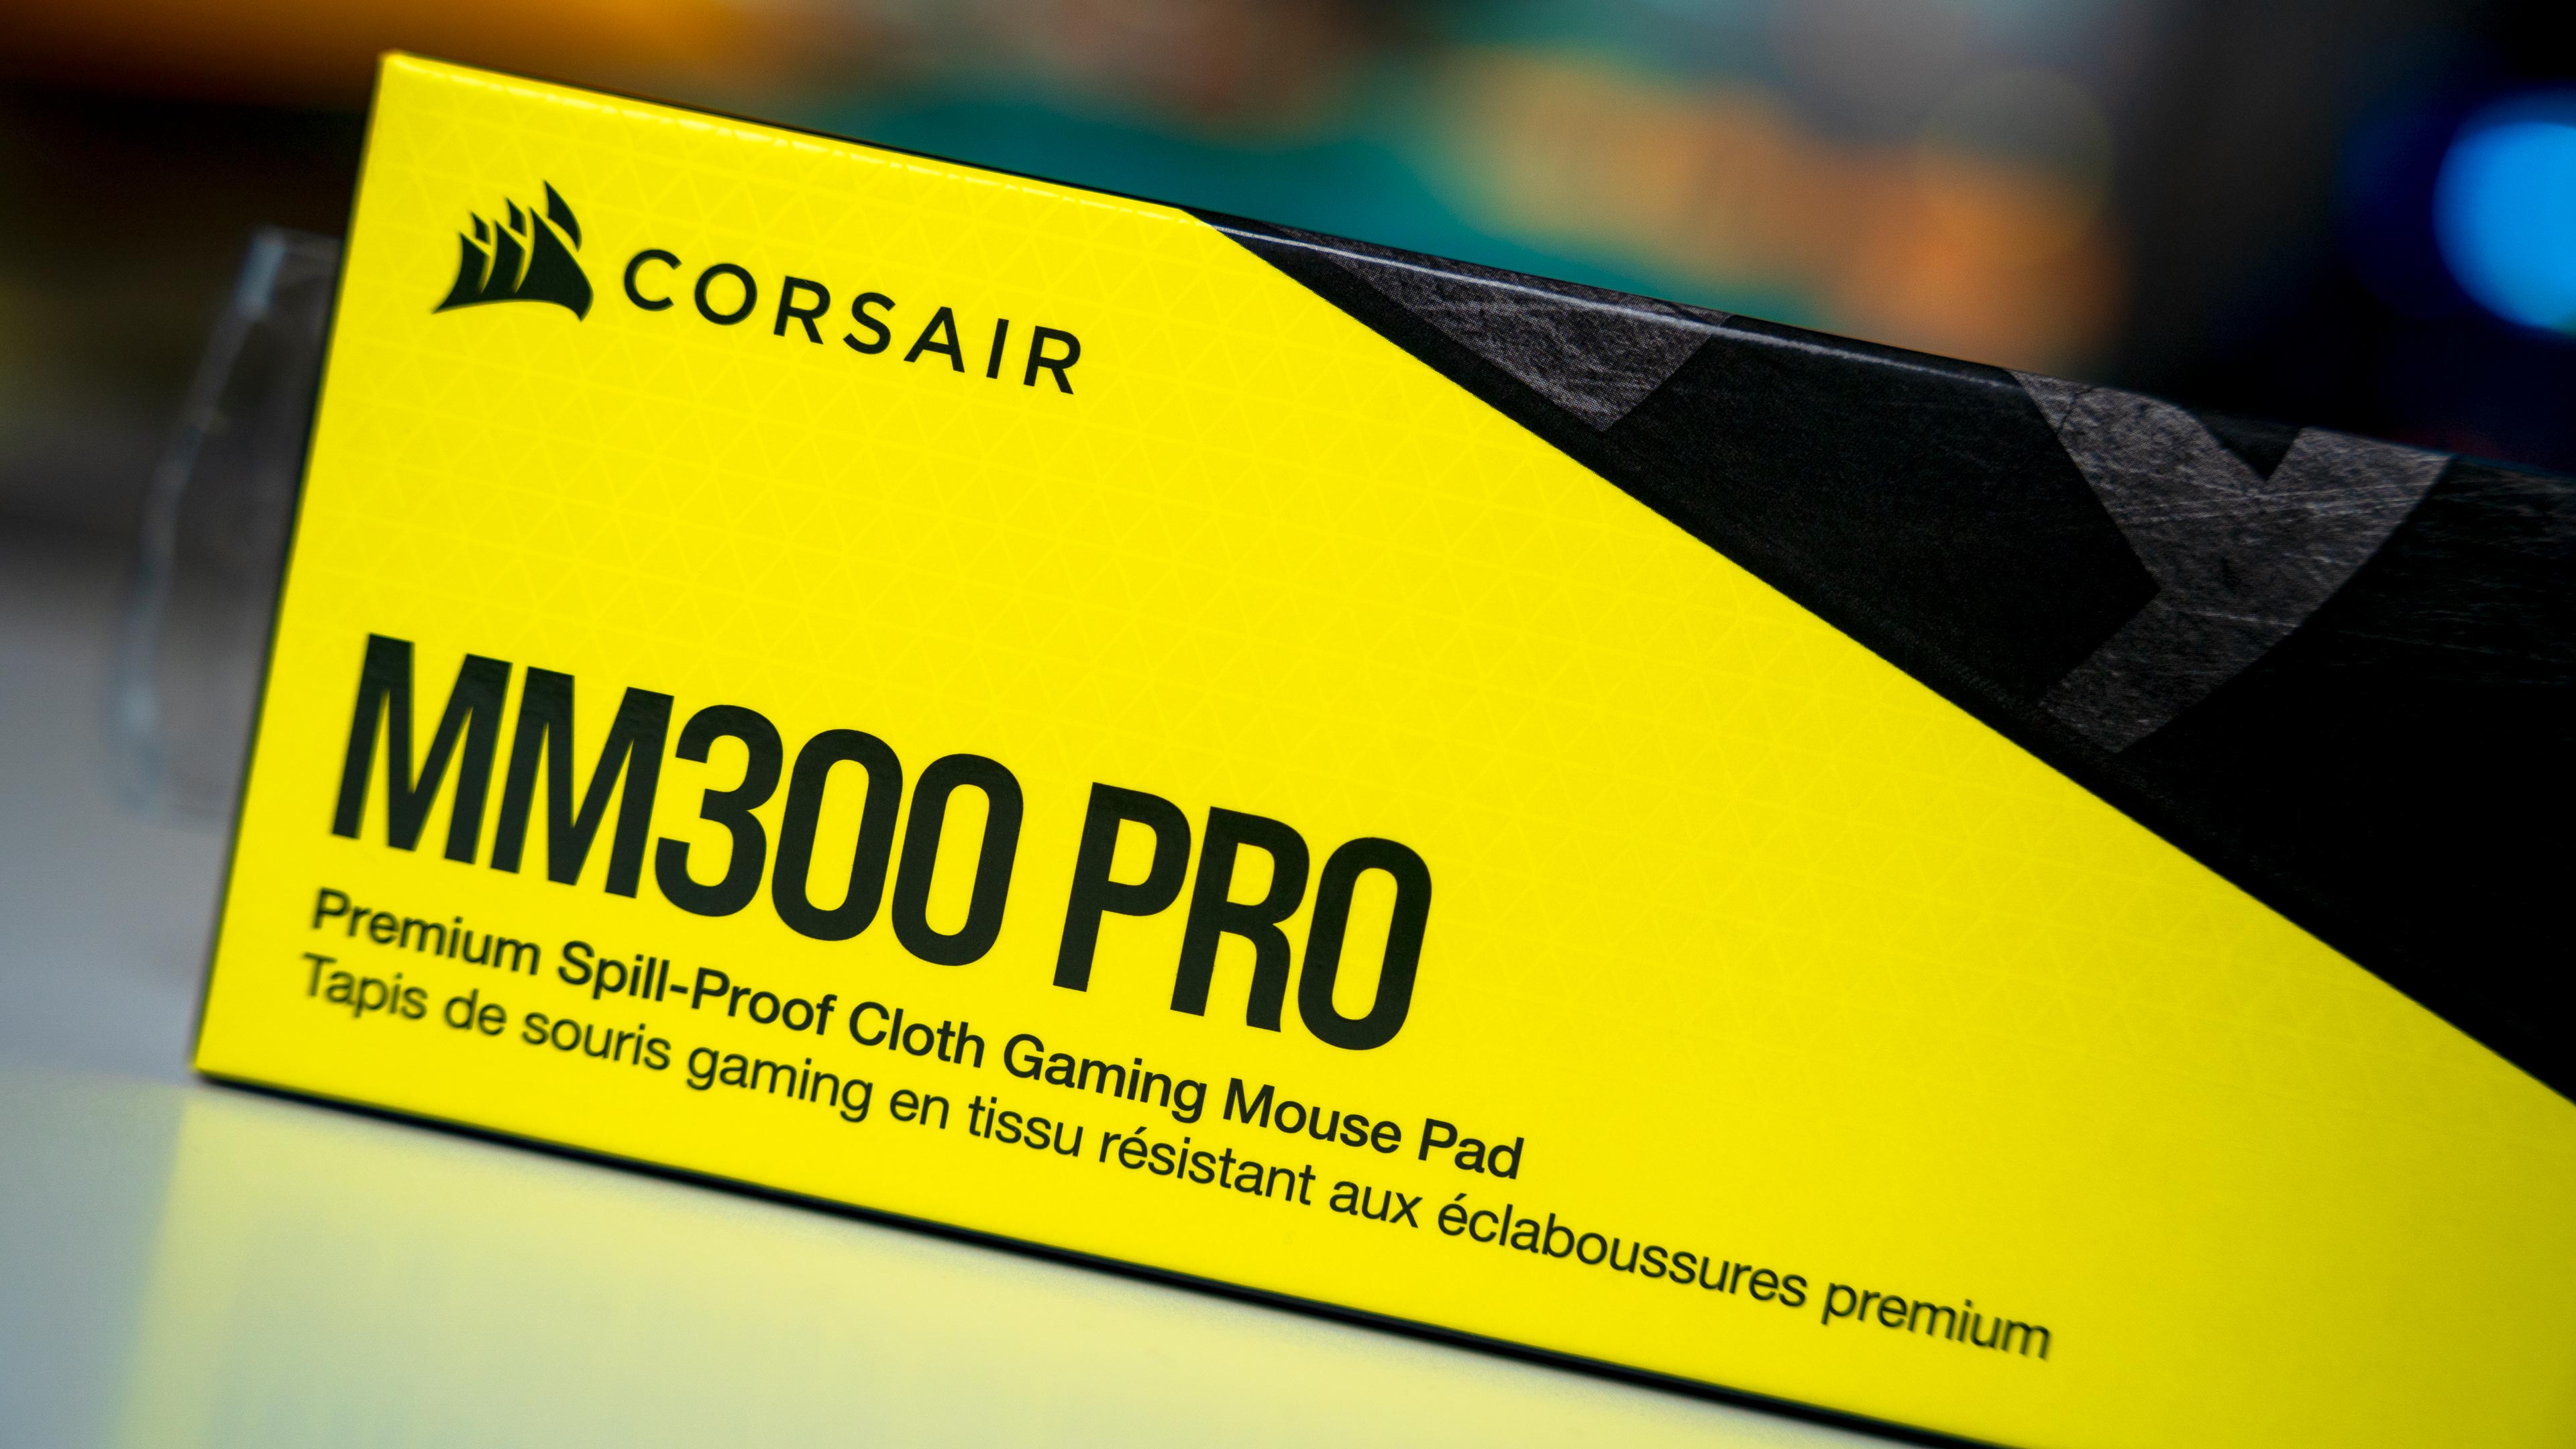 Corsair MM300 Pro Box (5)